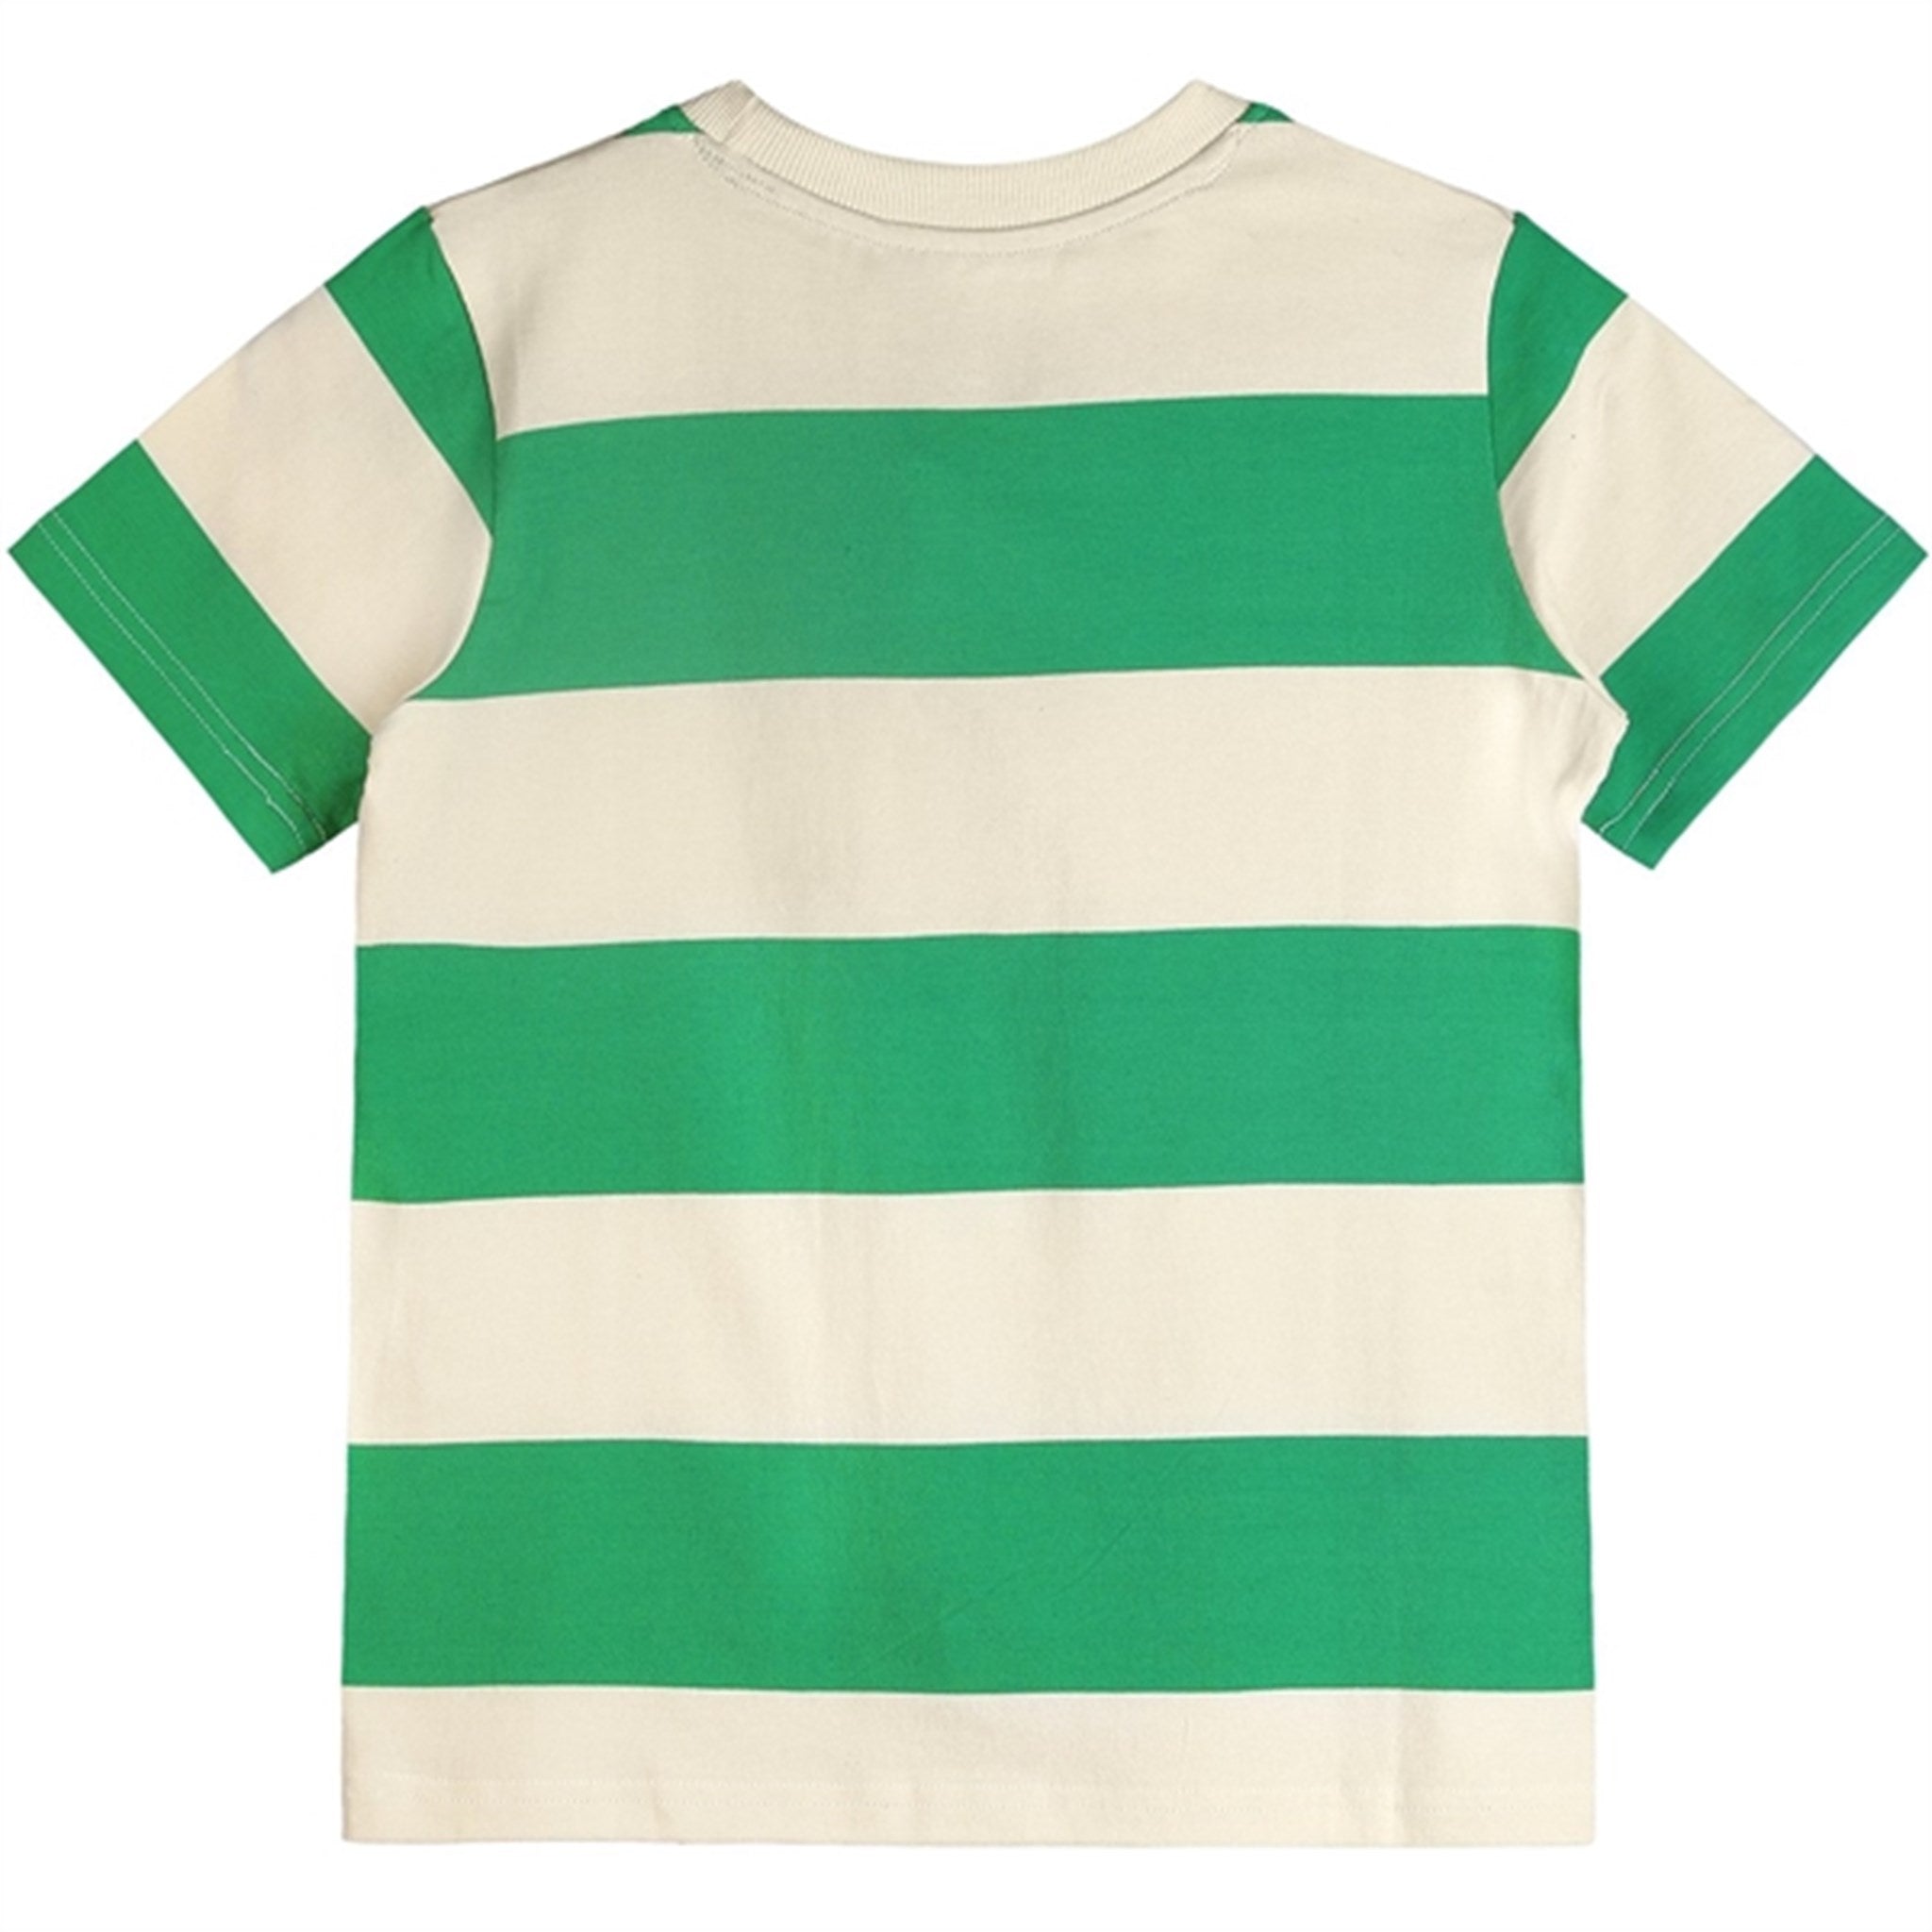 The New Bright Green Jae T-shirt 5